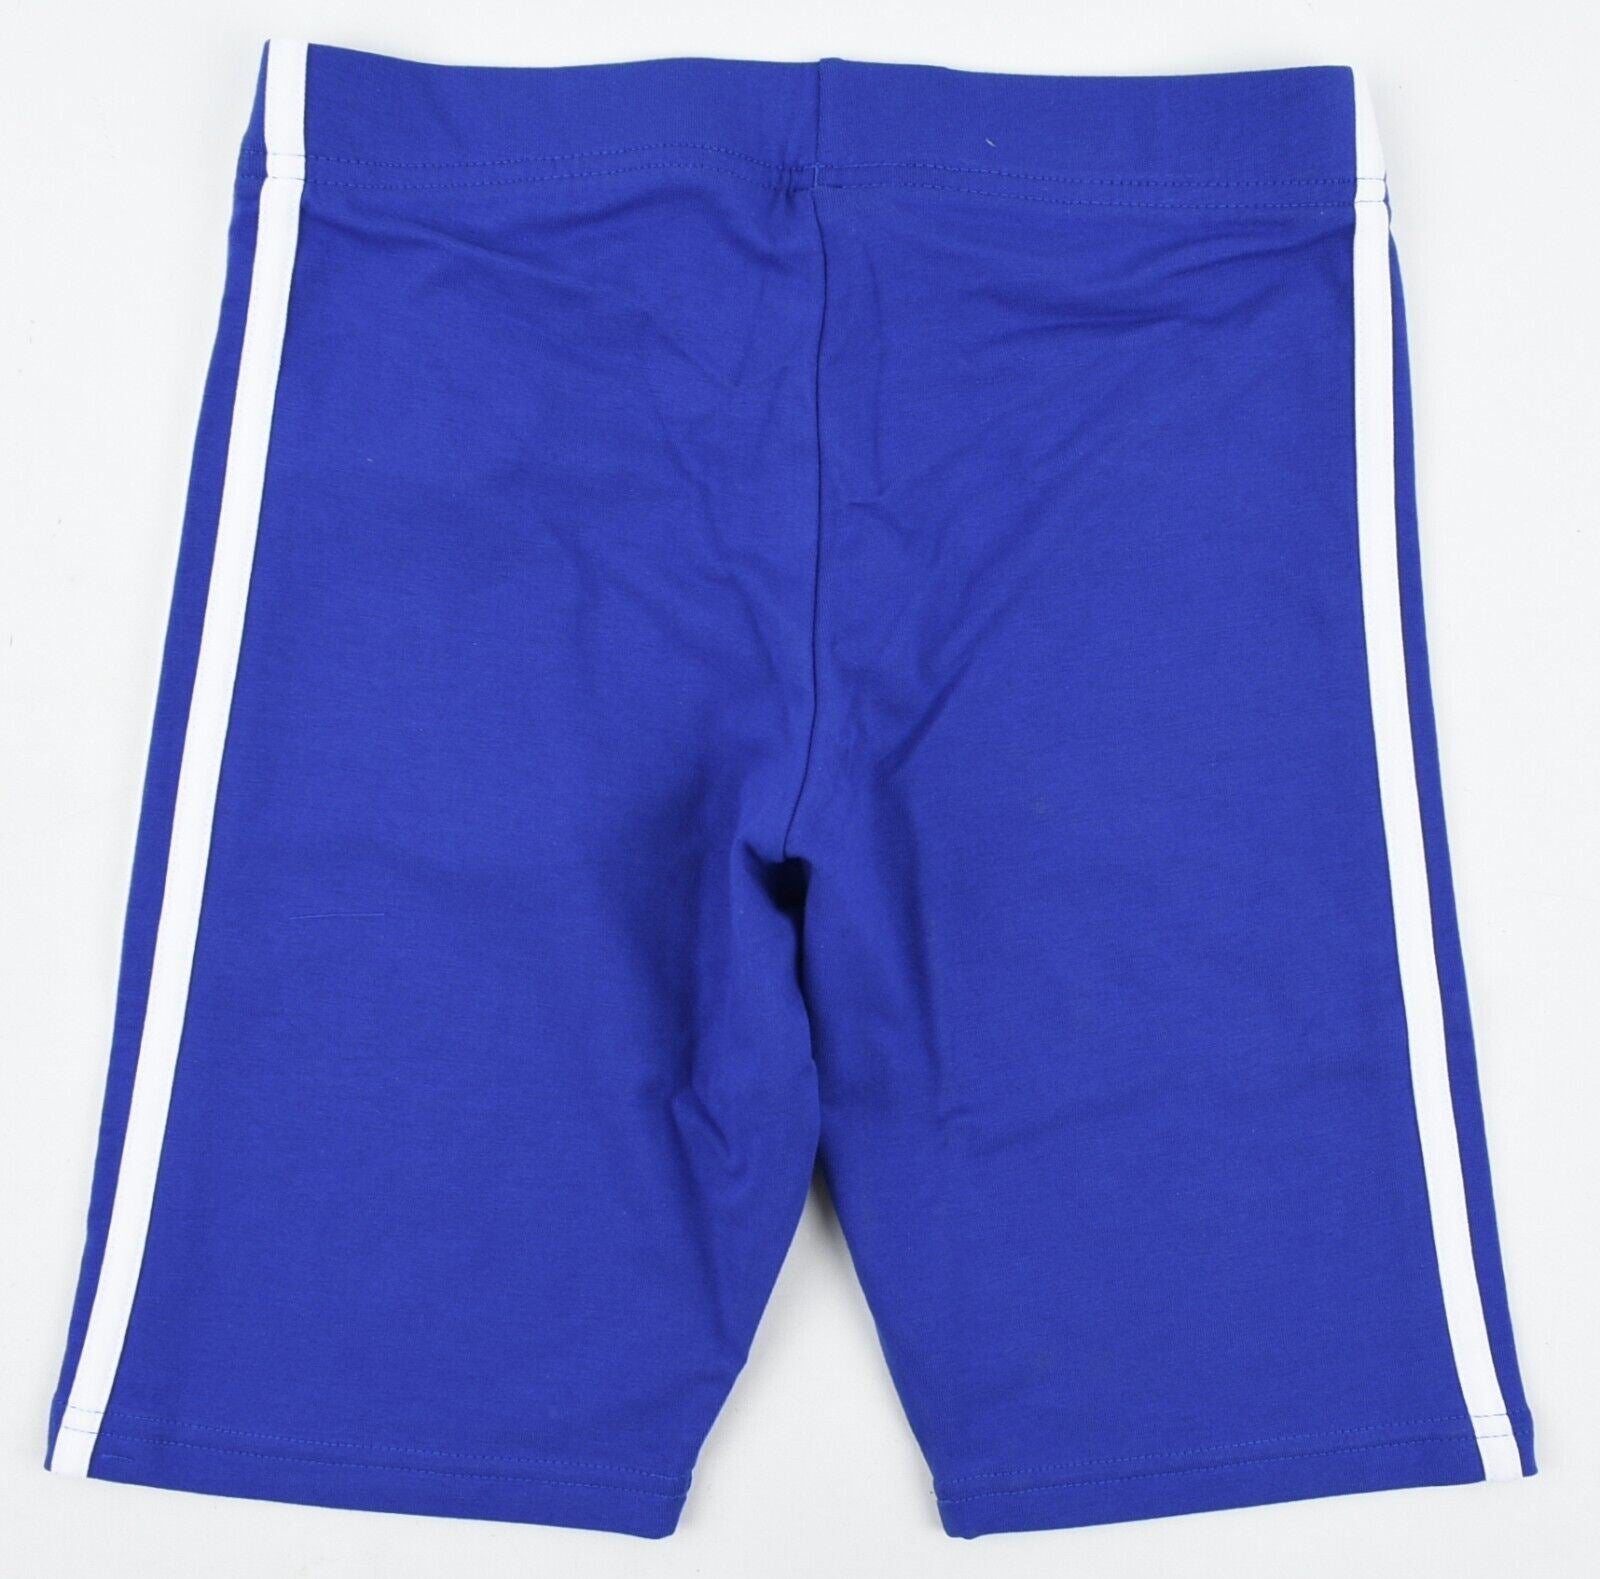 ADIDAS Womens 3 Stripes Essential Cycling Shorts, Leggings, Bold Blue, size L